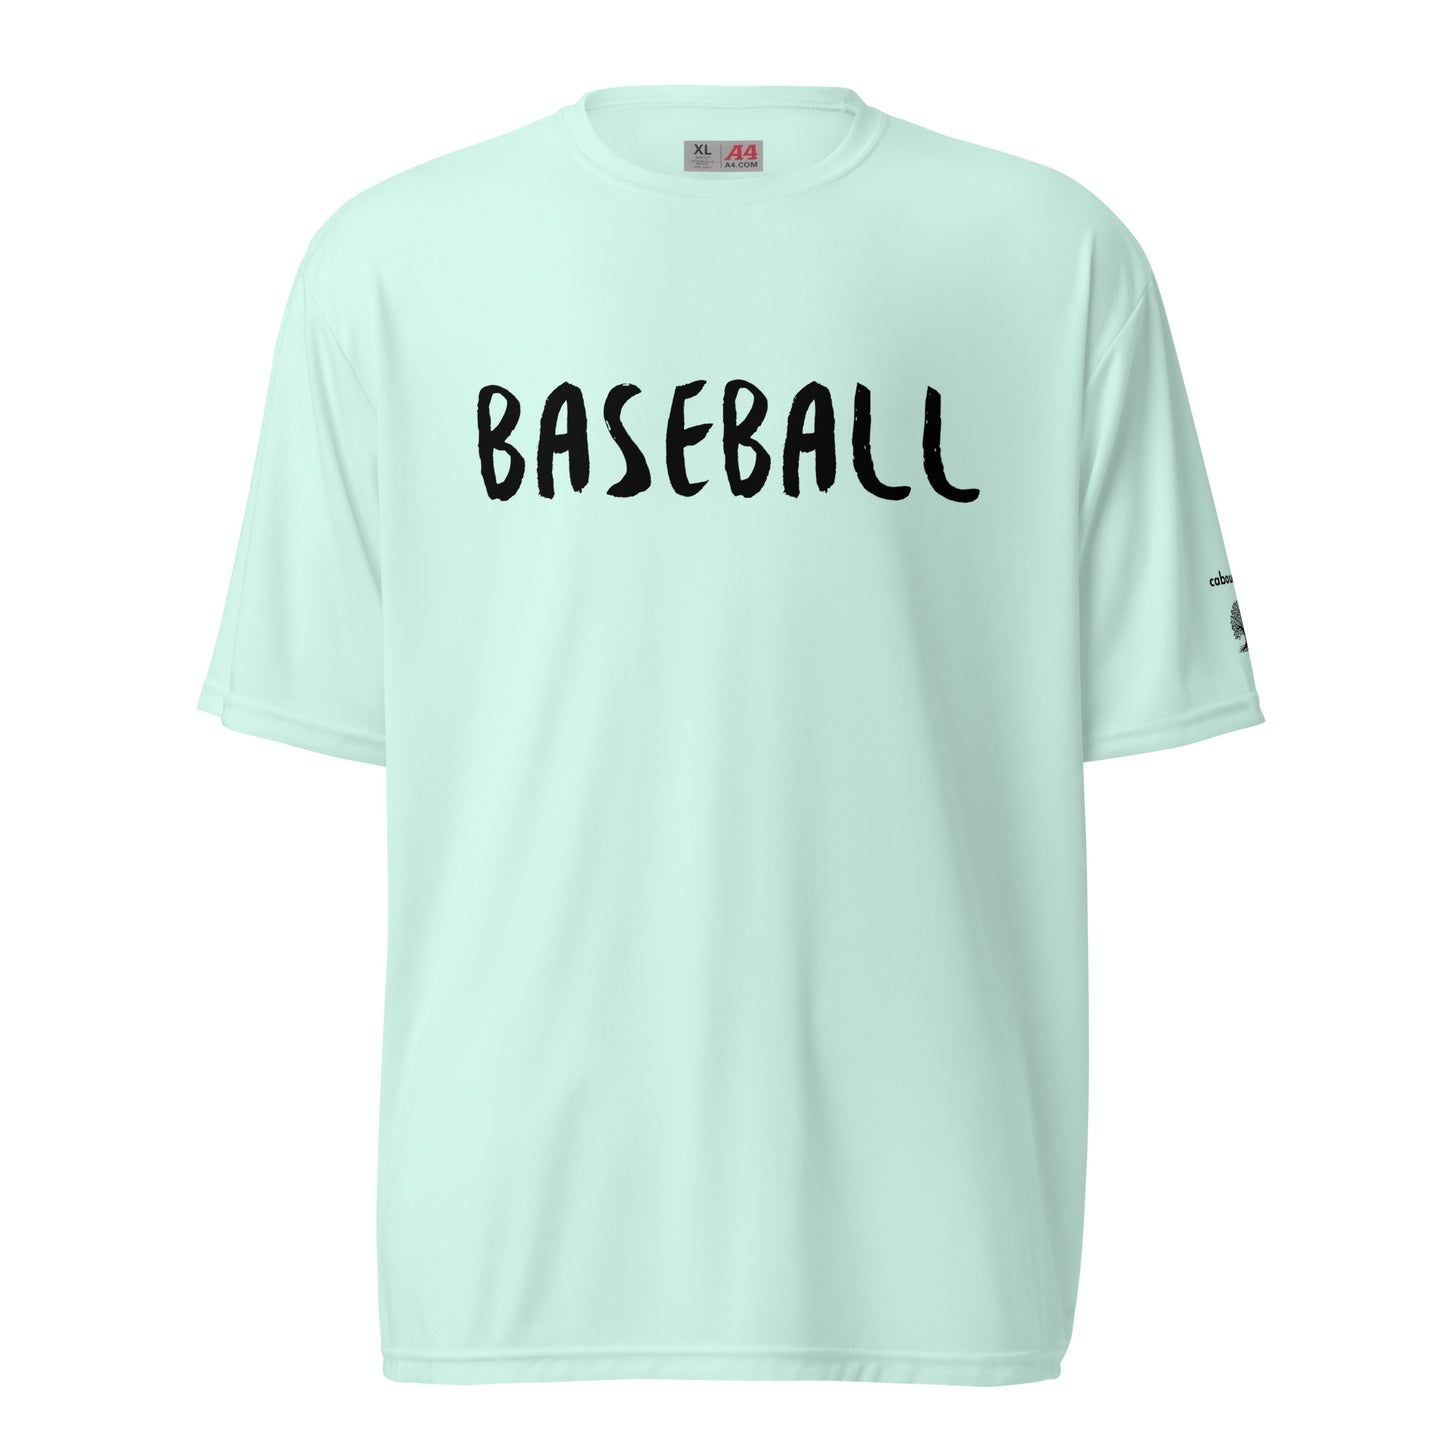 Unisex performance crew neck t-shirt - Baseball (Black)